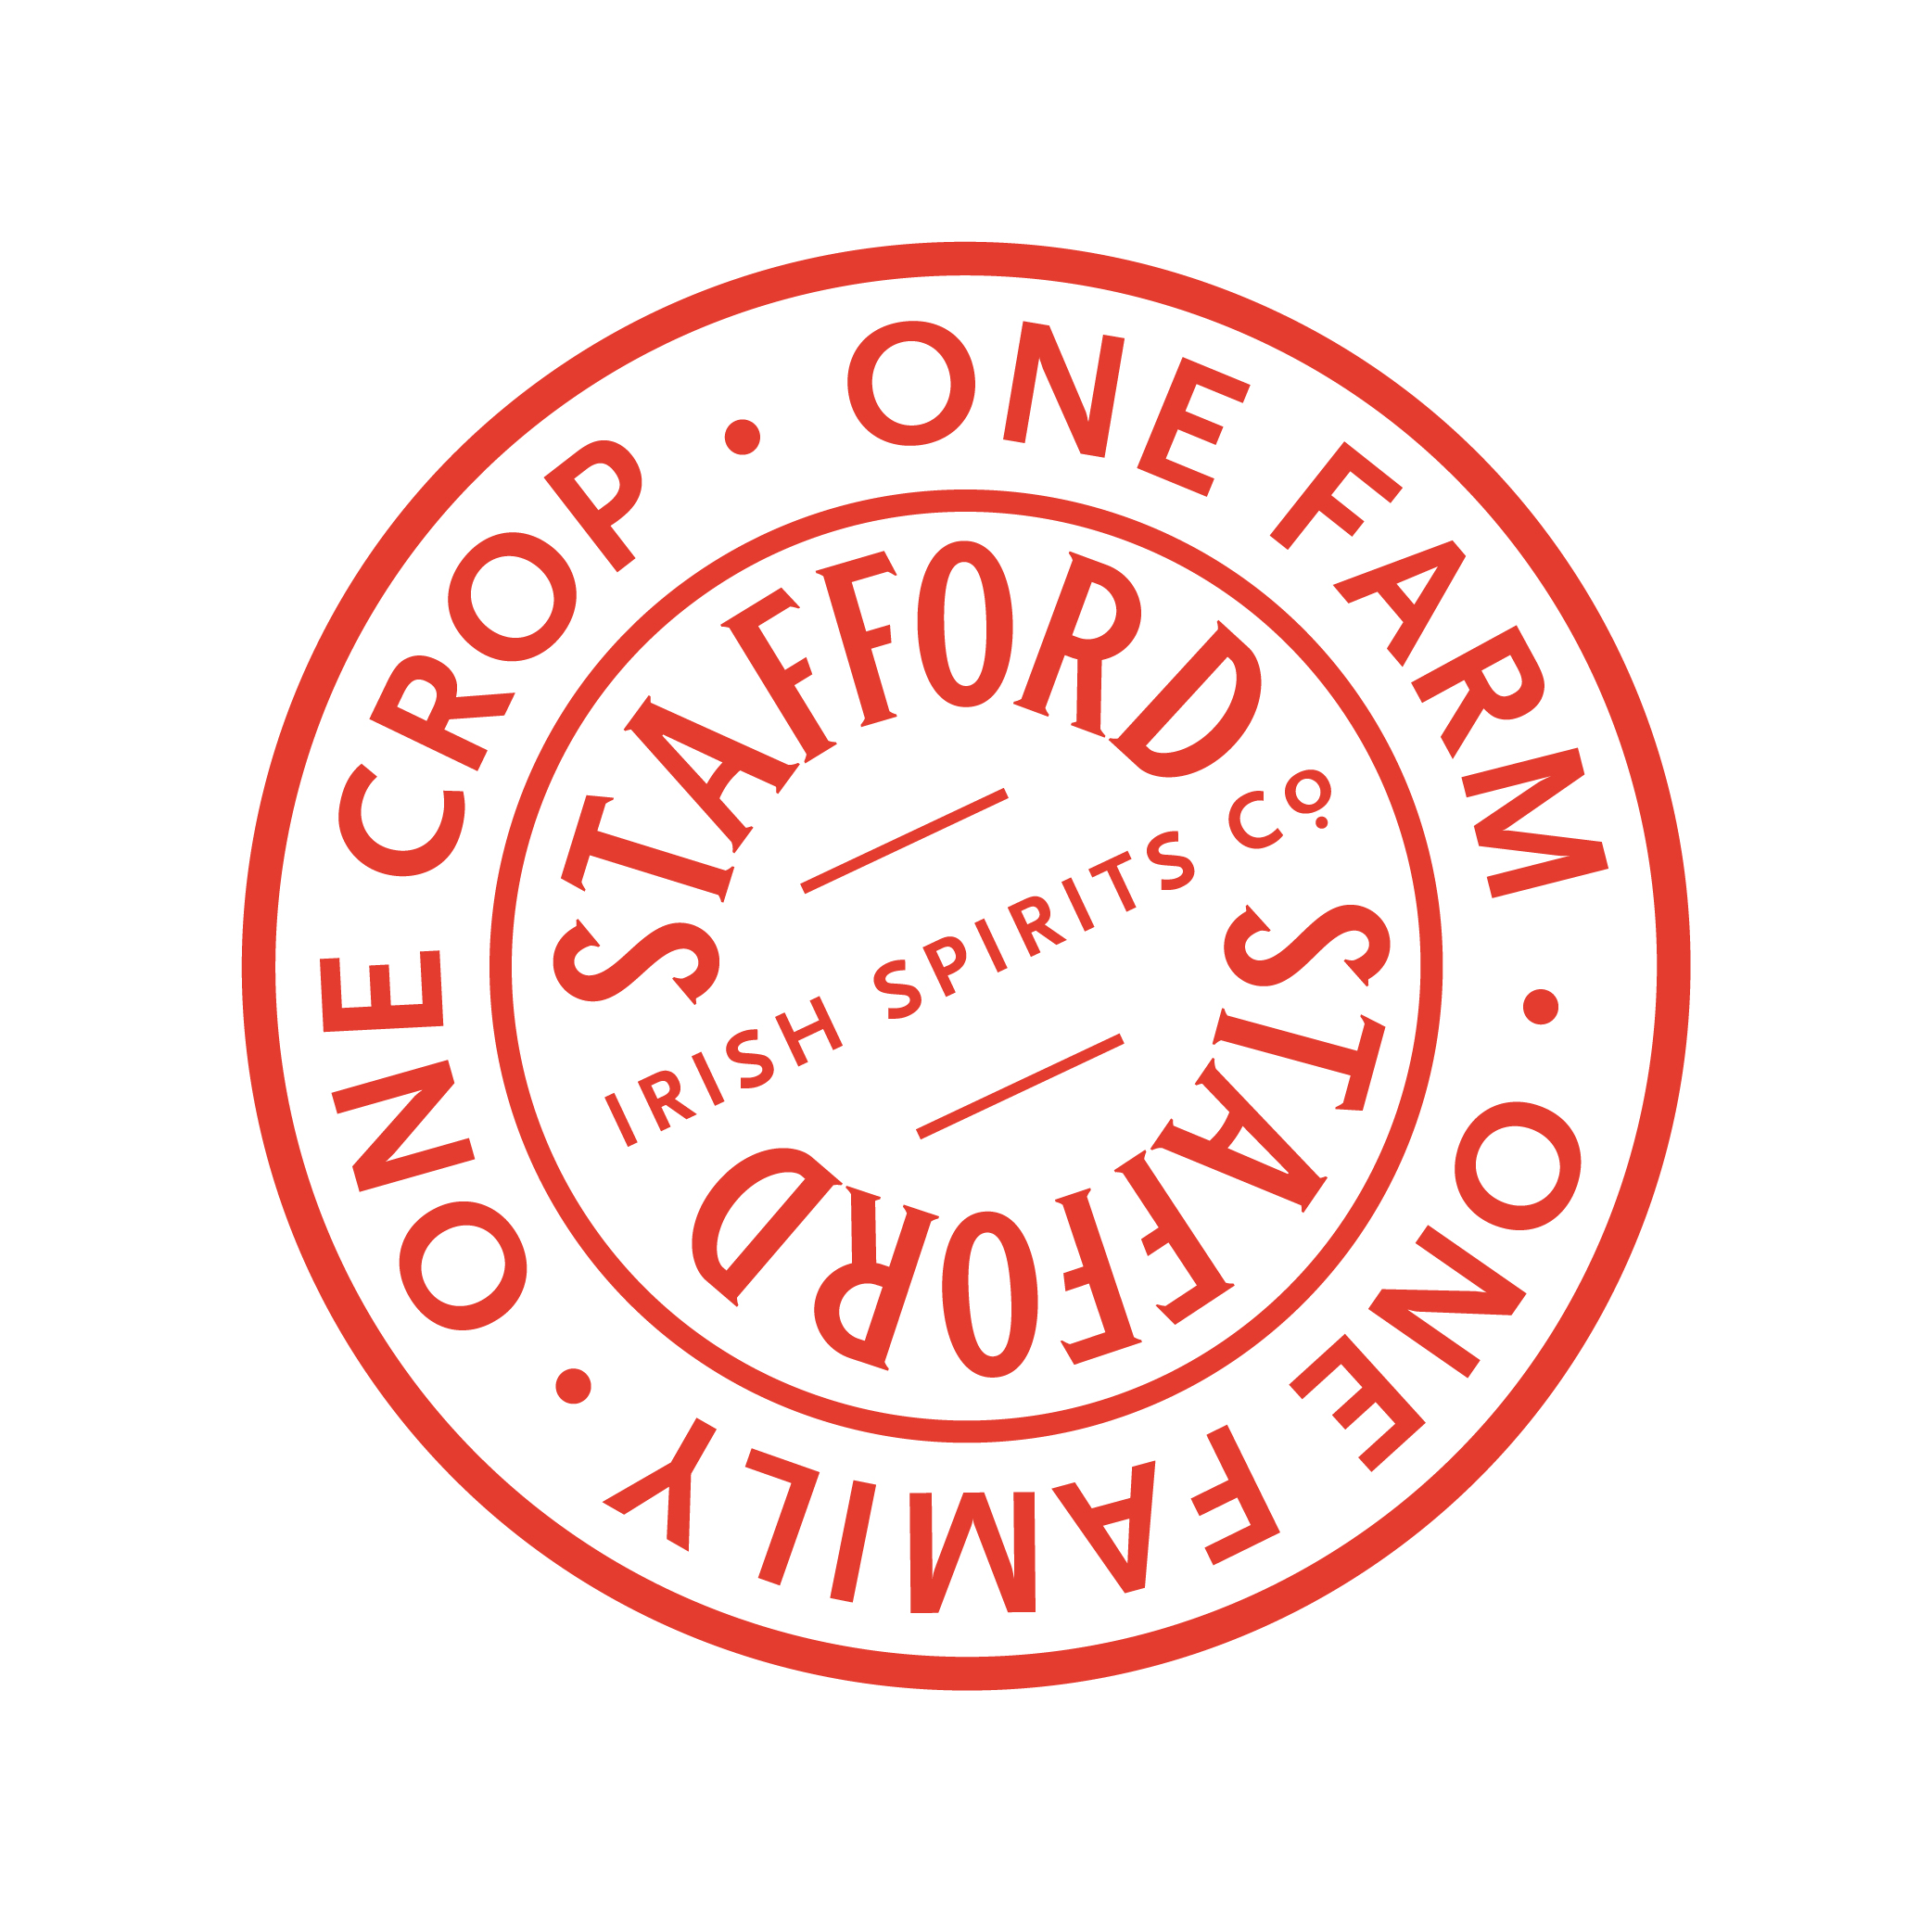 Image of Stafford Spirits Ltd logotype